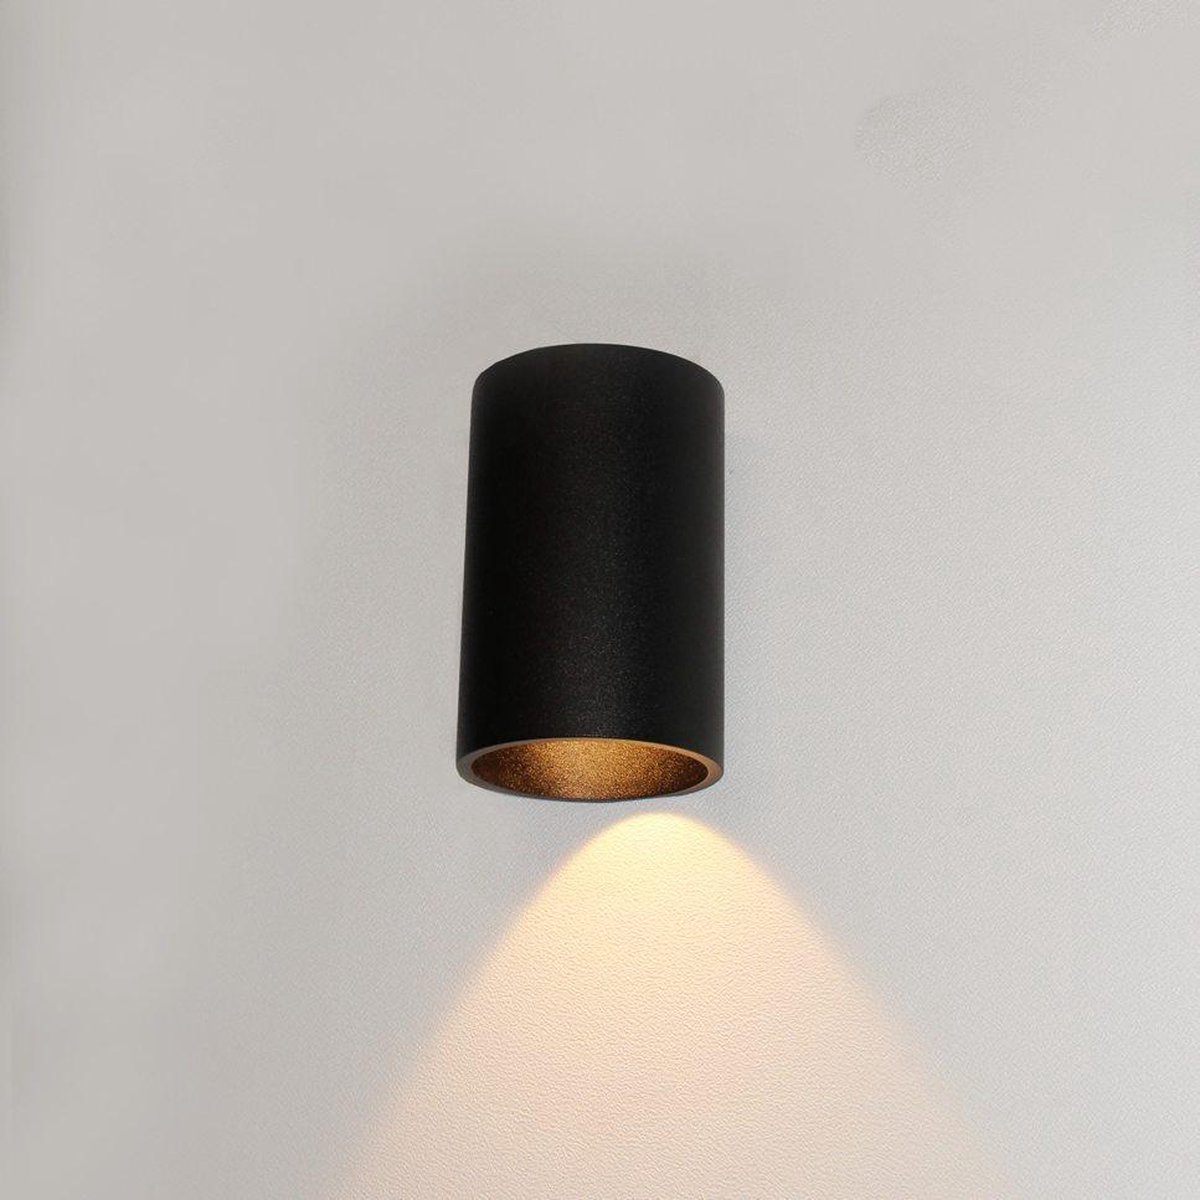 Wandlamp Brody 1 Zwart - Ø7,2cm - LED 4W 2700K 360lm - IP54 - Dimbaar > wandlamp binnen zwart | wandlamp buiten zwart | wandlamp zwart | buitenlamp zwart | muurlamp zwart | led lamp zwart | sfeer lamp zwart | design lamp zwart